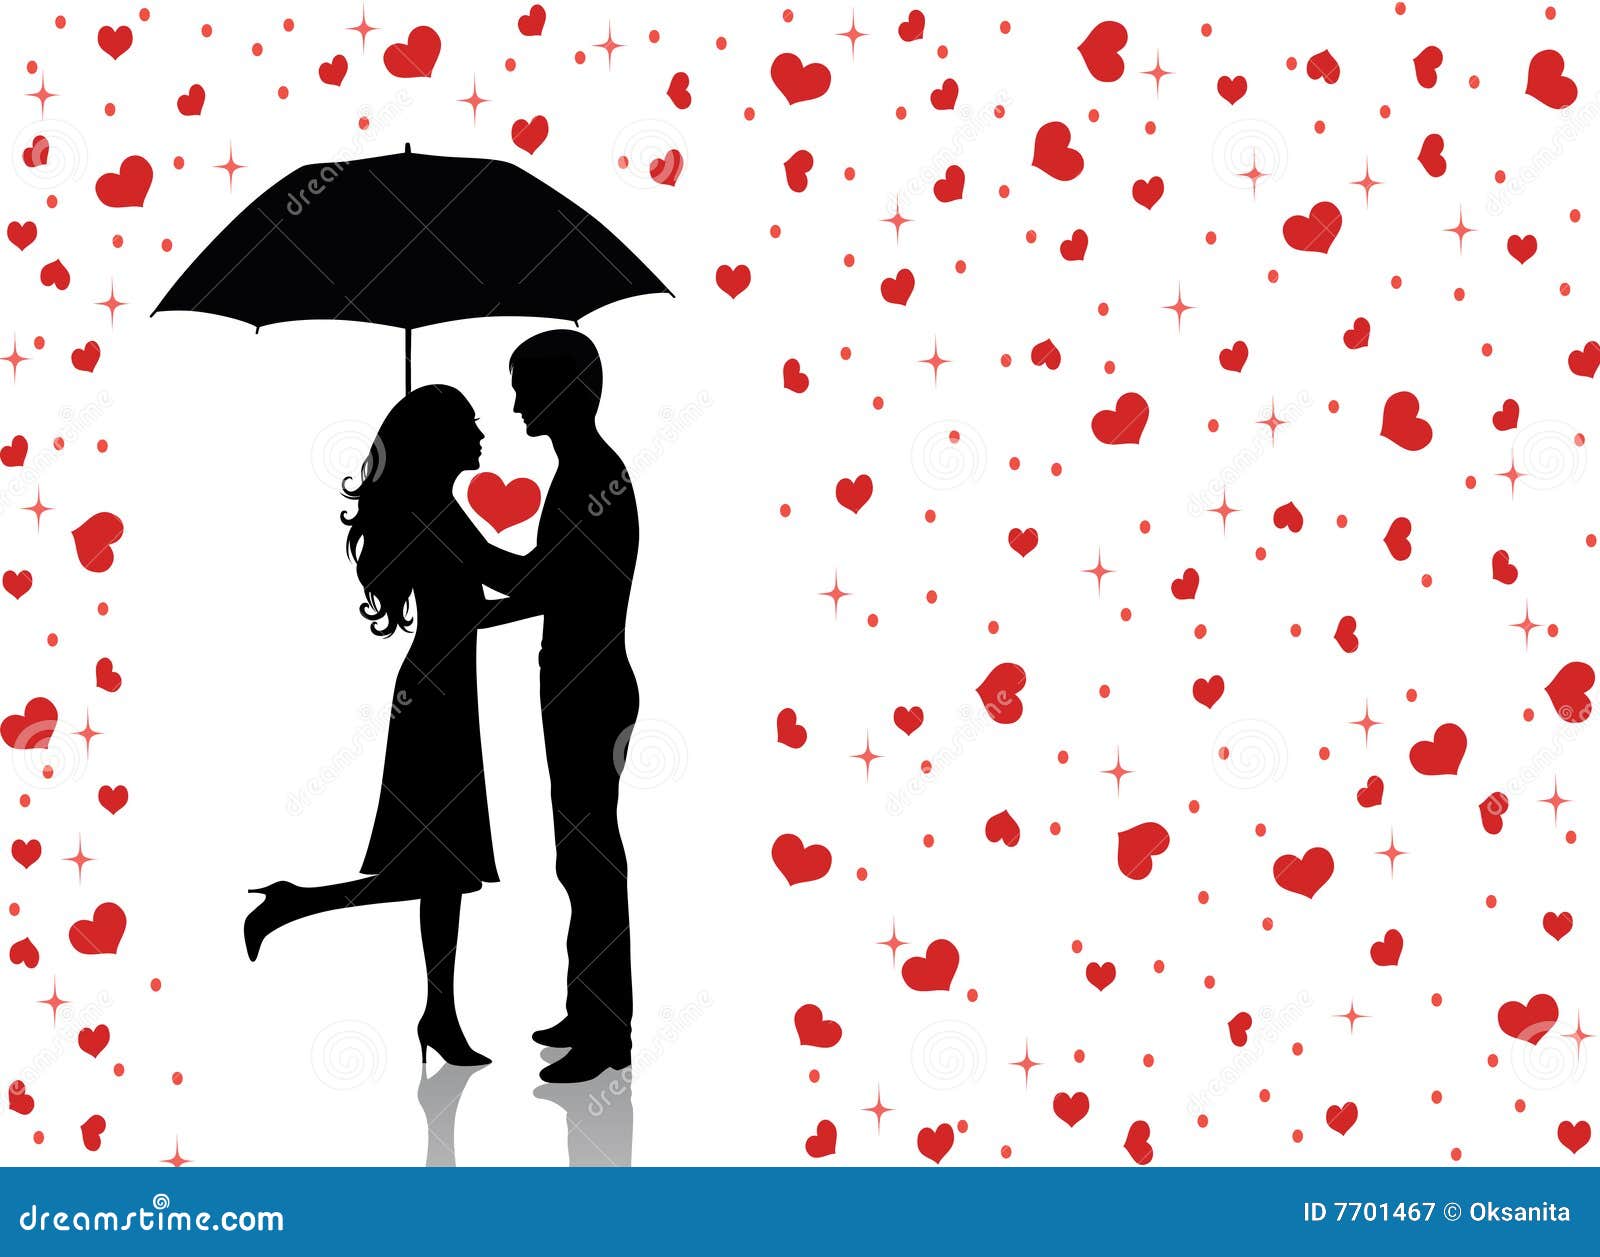 Rain Of Love2. Royalty Free Stock Photography - Image: 7701467